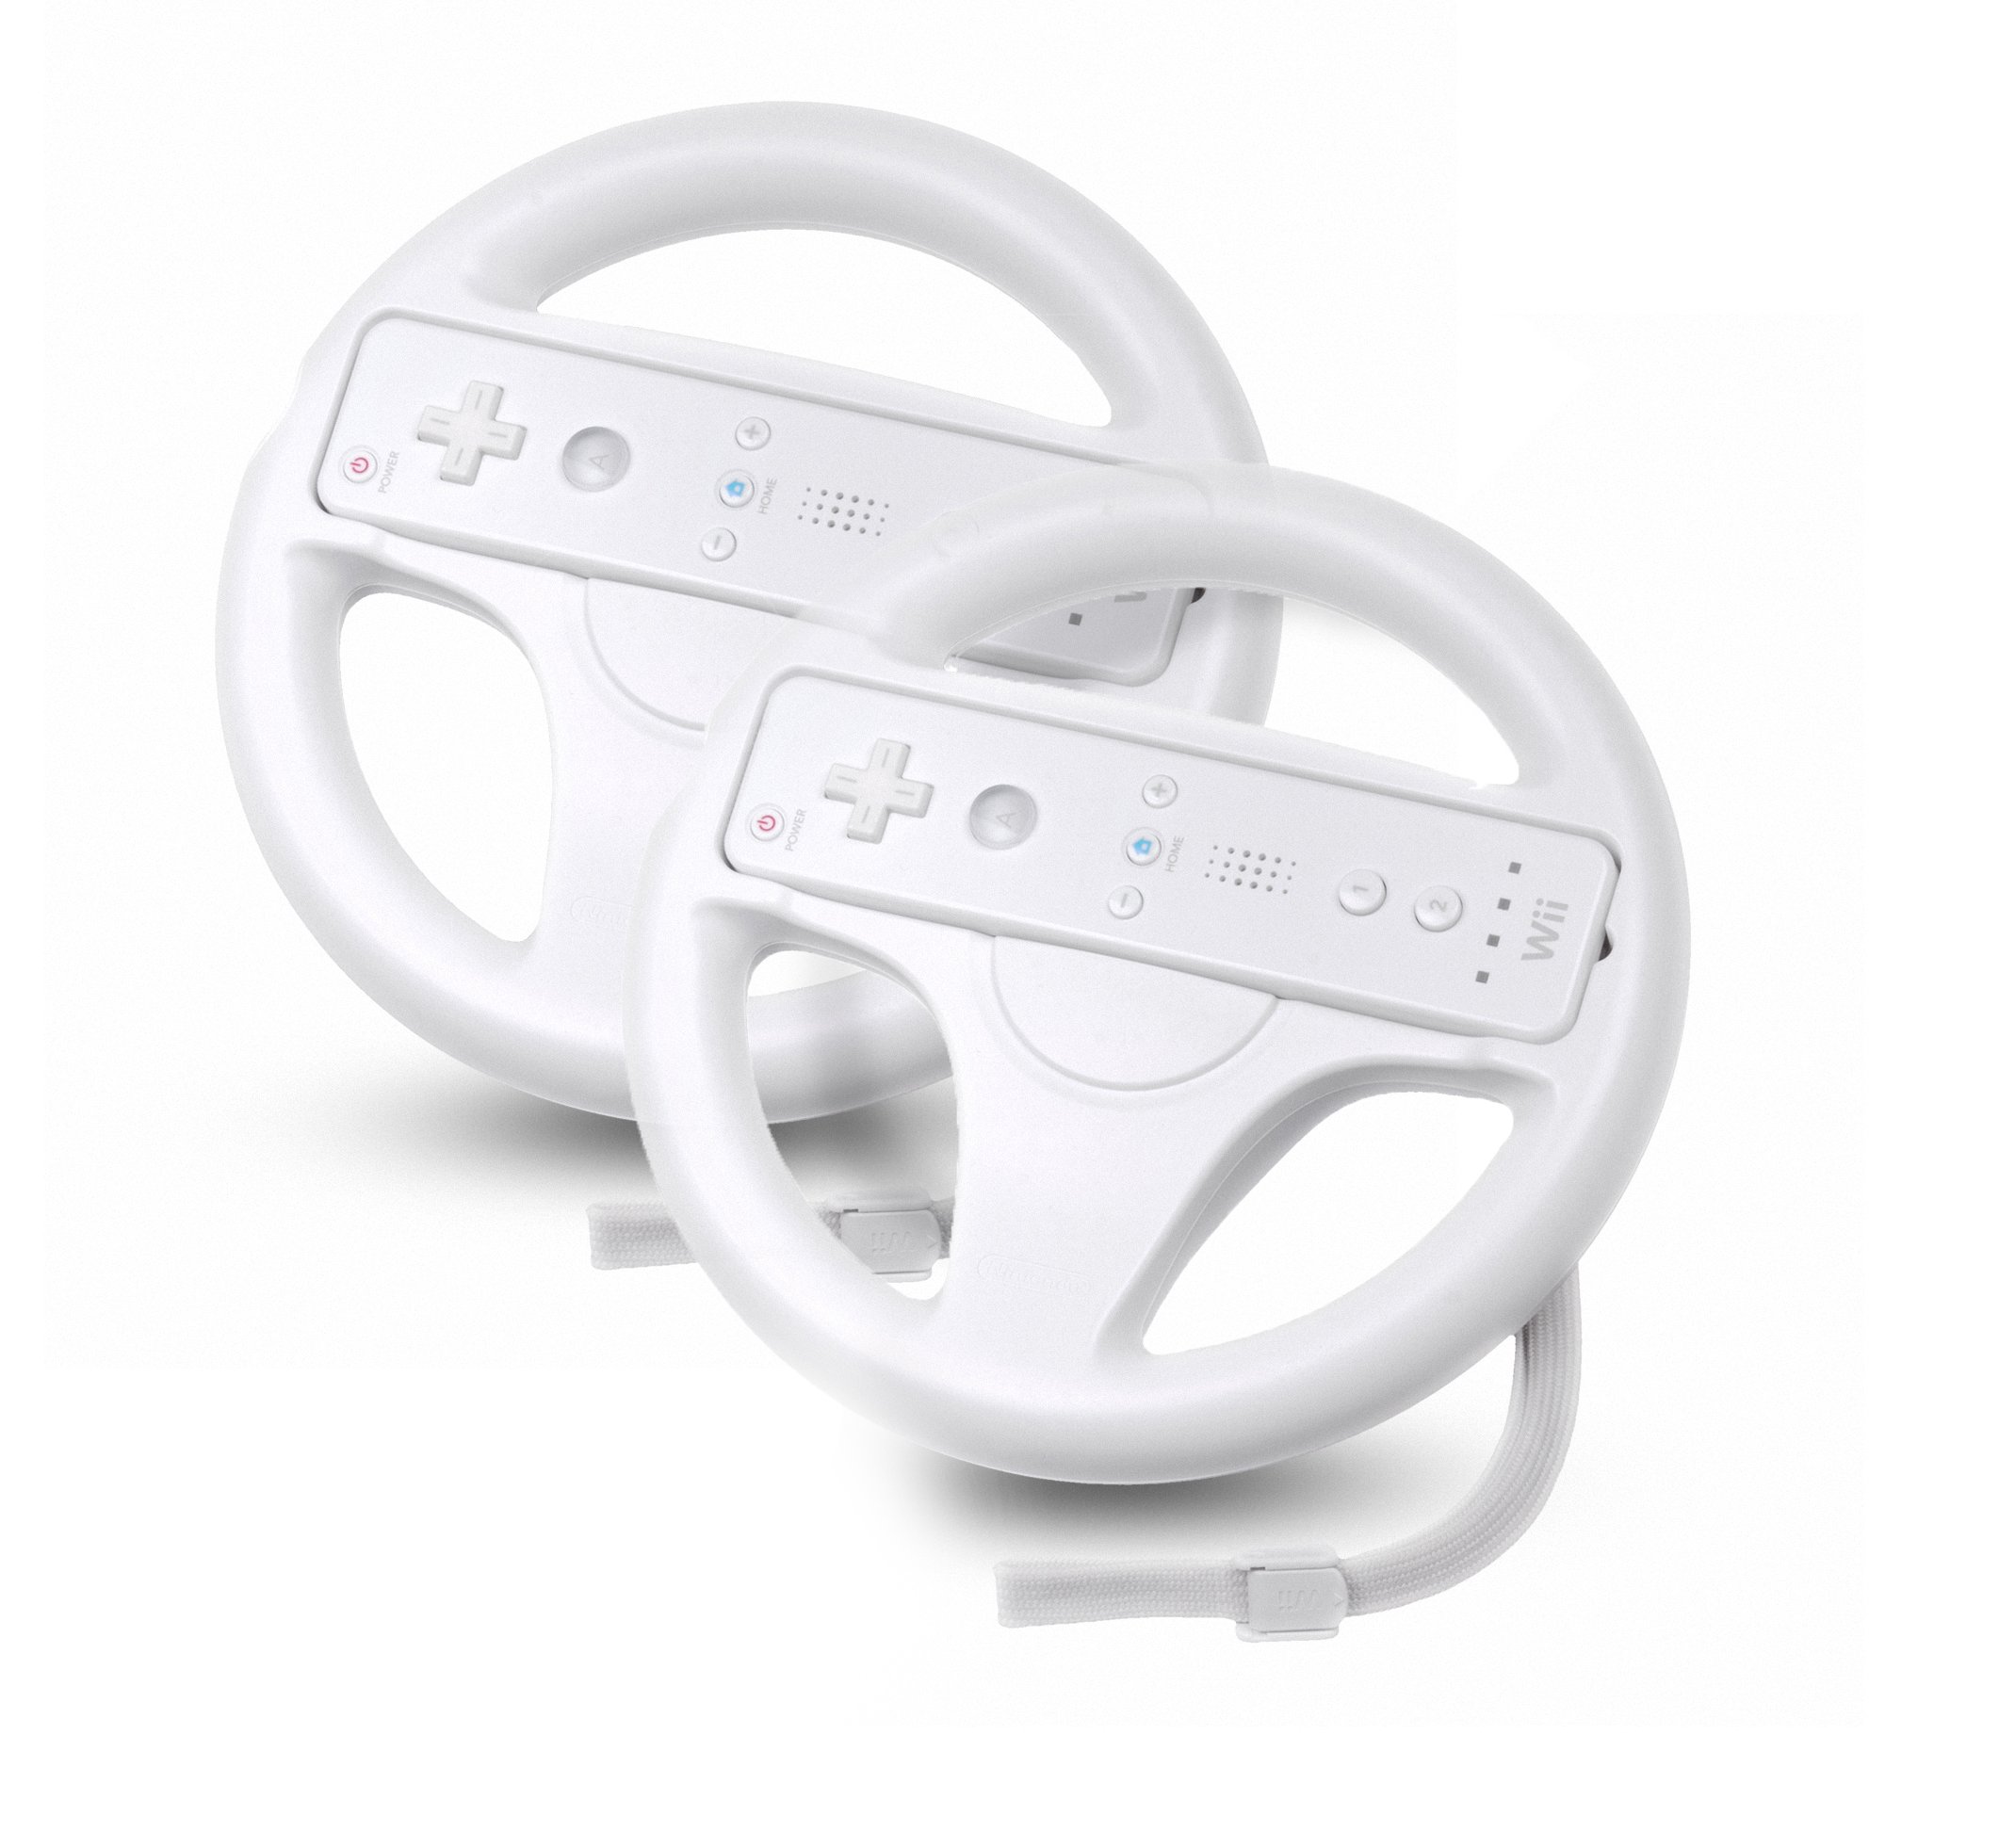 Beastron Bluetooth Mario Kart Racing Wheel Compatible with Nintendo Wii, 2 Sets White Color Bundle